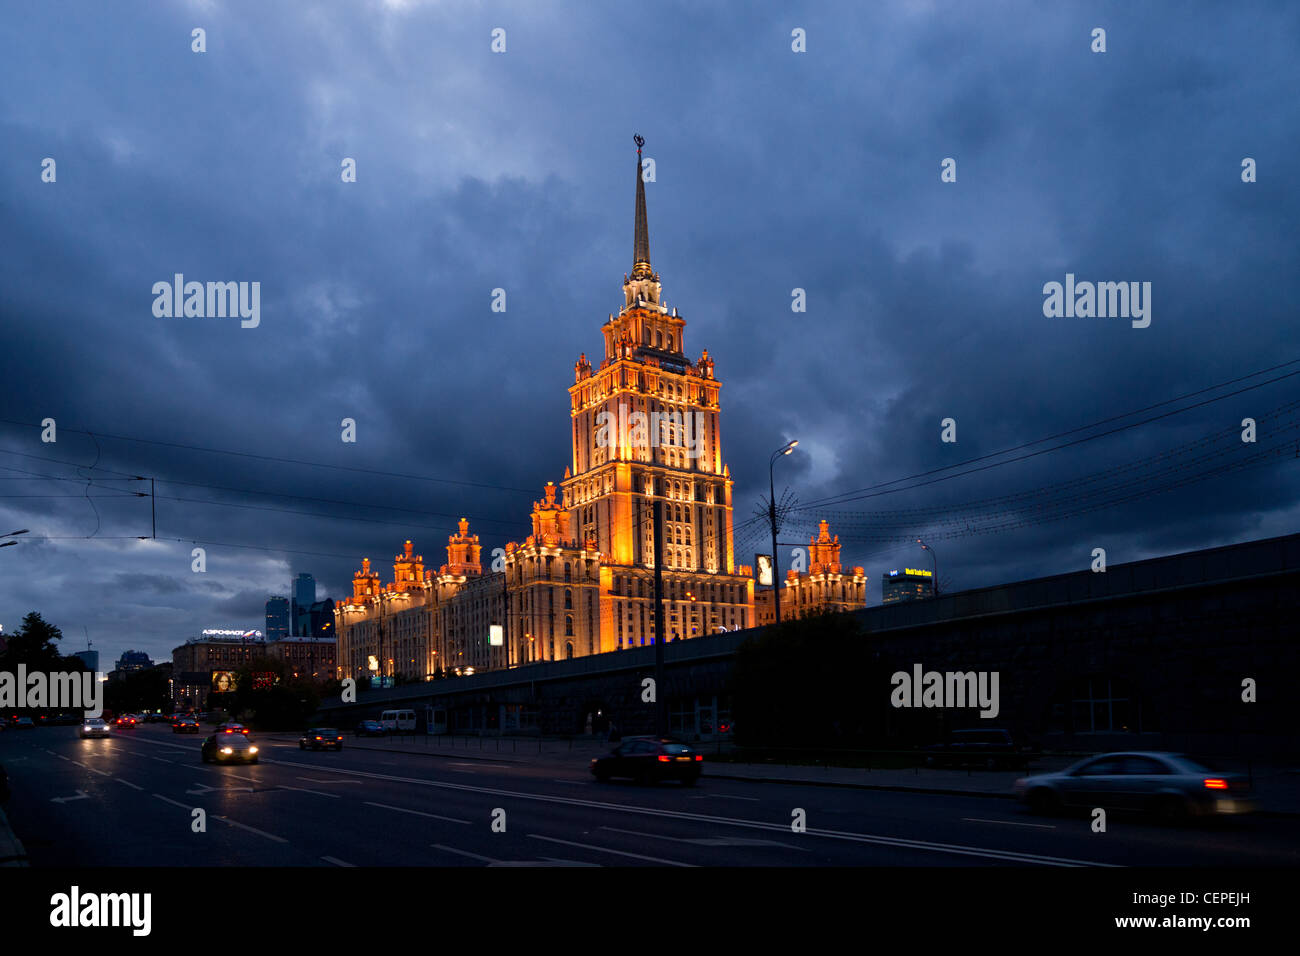 Illuminated hotel Radisson Ukraina in Moscow. Russia. Stock Photo